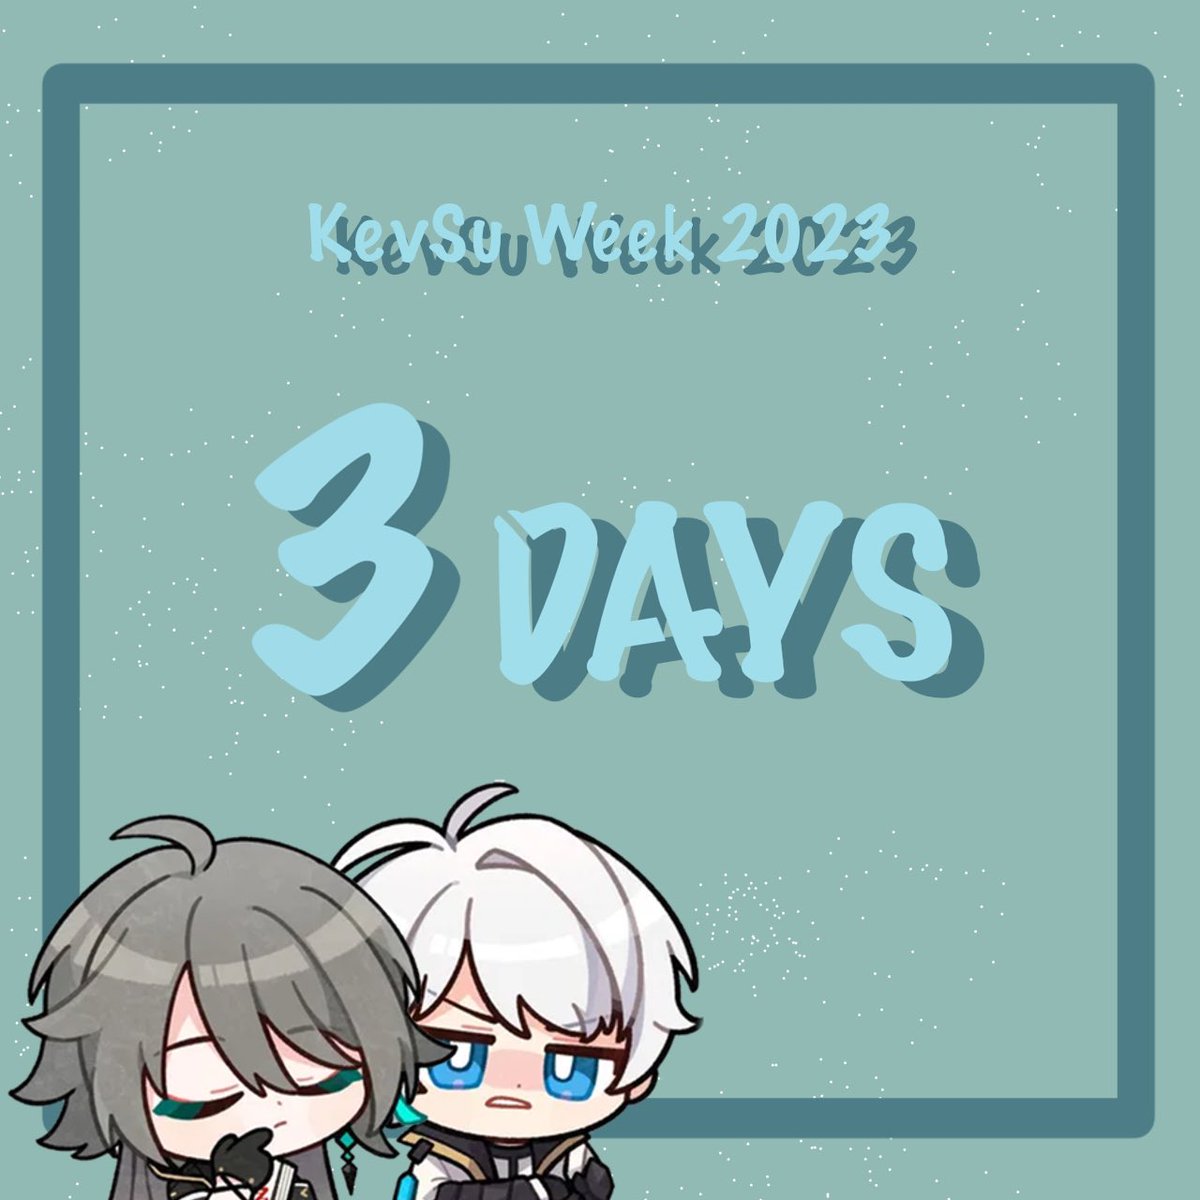 #Kevinsu #kevsu #Kevinsuweek23 #sukev 
3 more days until KevSu Week runs again! - selkie